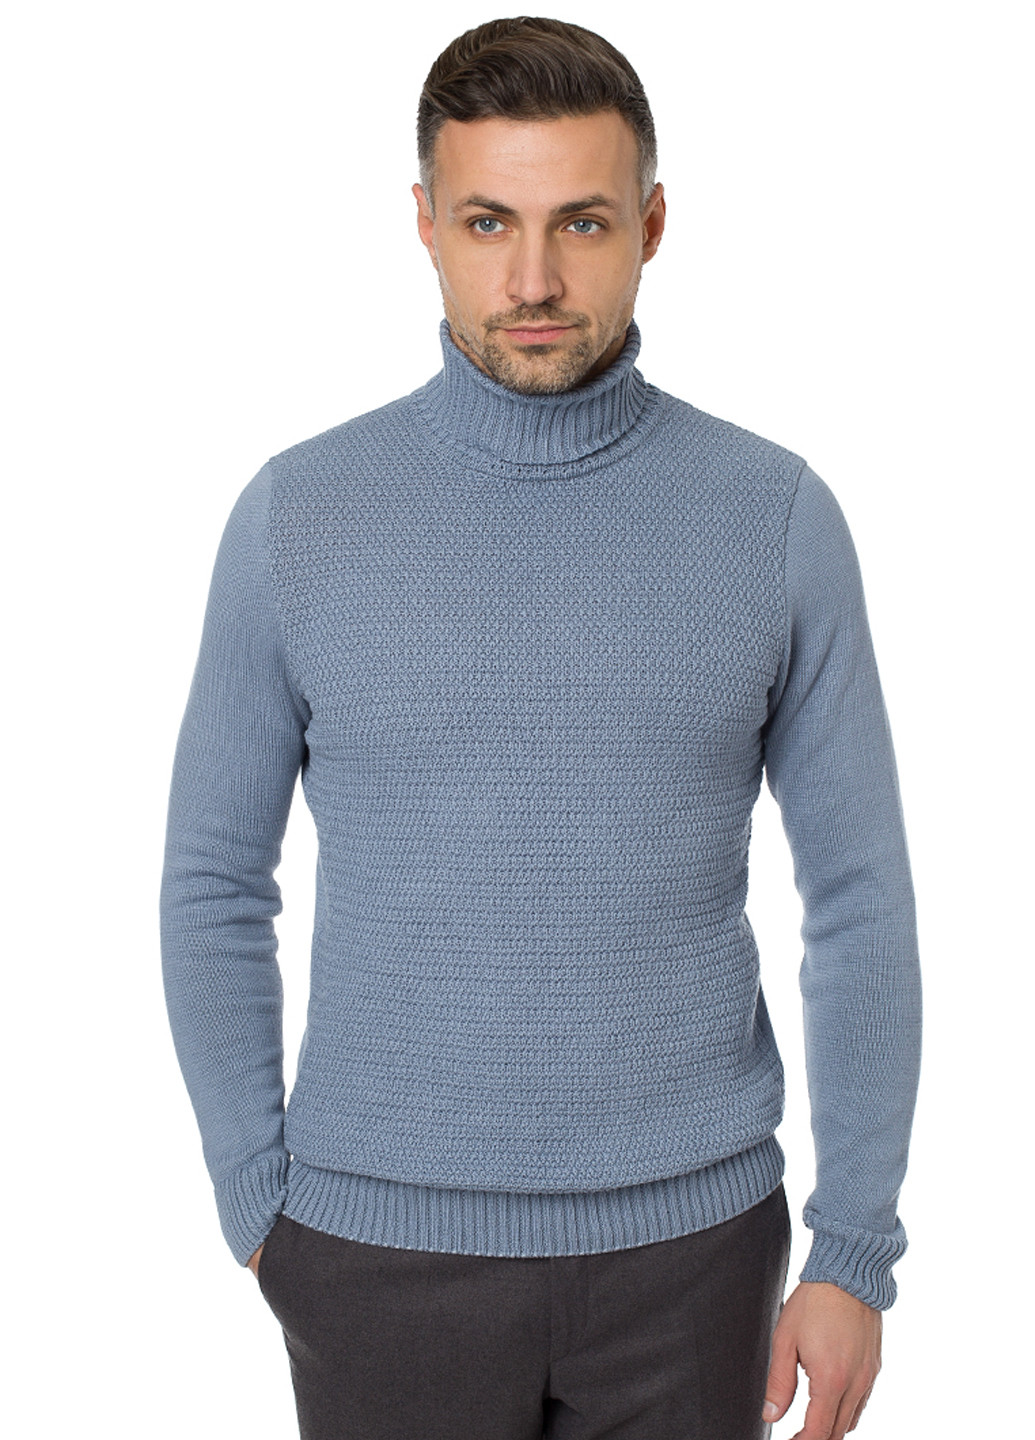 Серо-голубой демисезонный свитер Arber